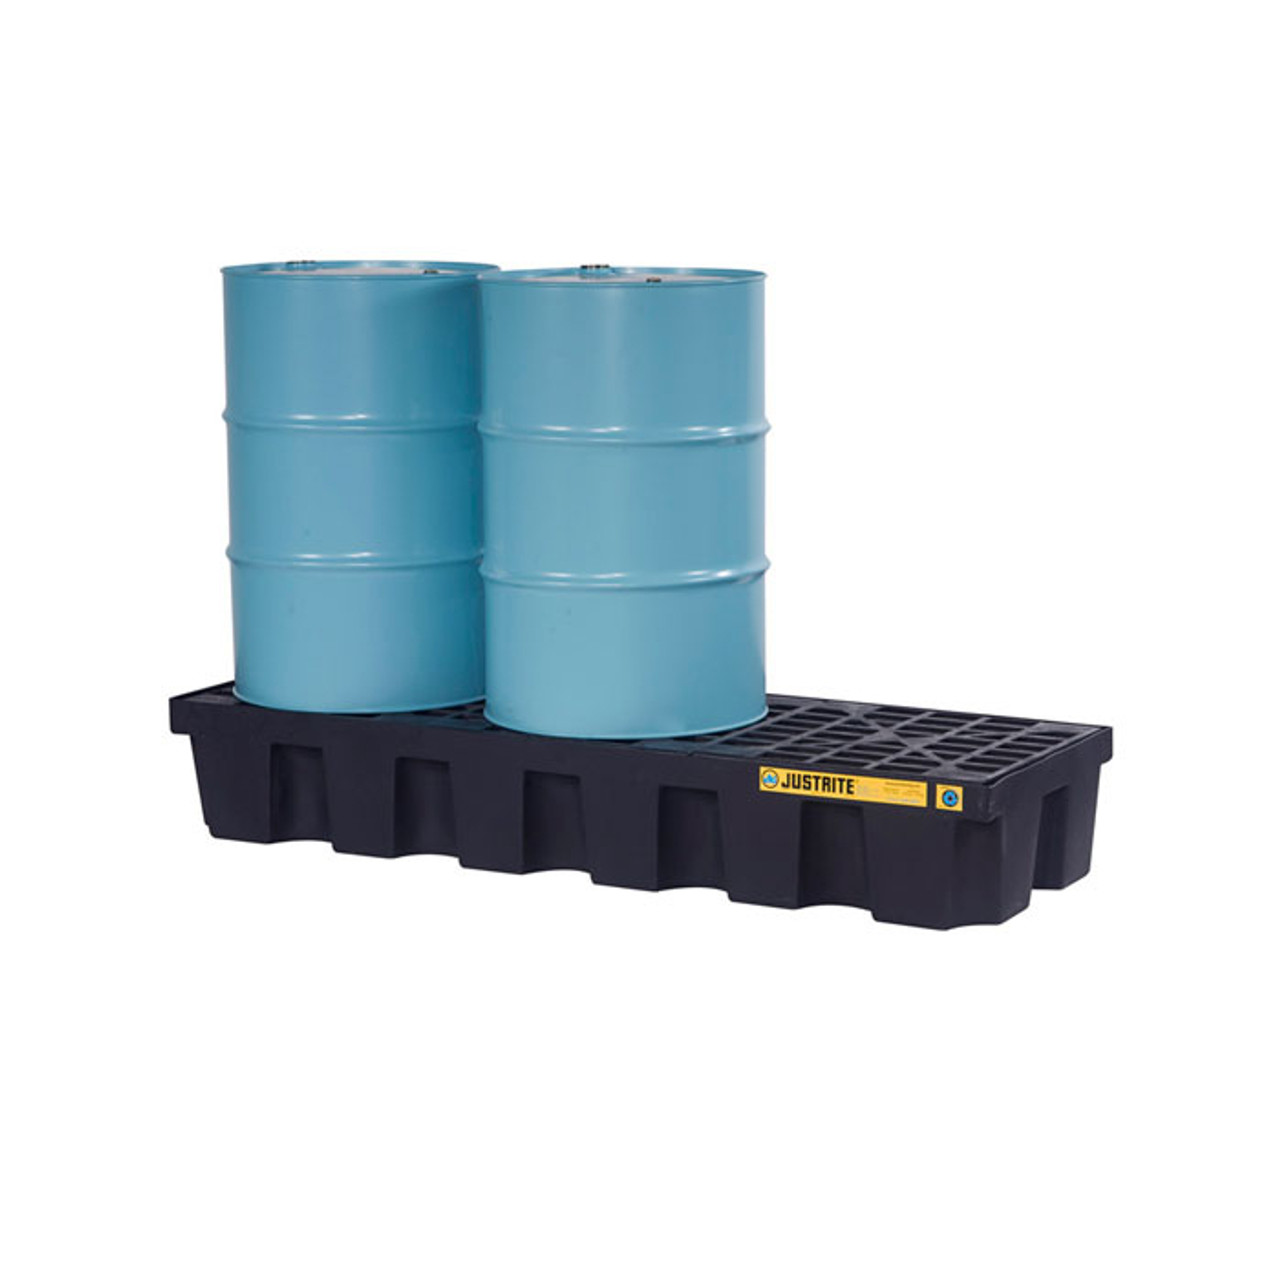 Justrite® EcoPolyBlend Spill Control Pallet, 3 Drum, Recycled Polyethylene, Black